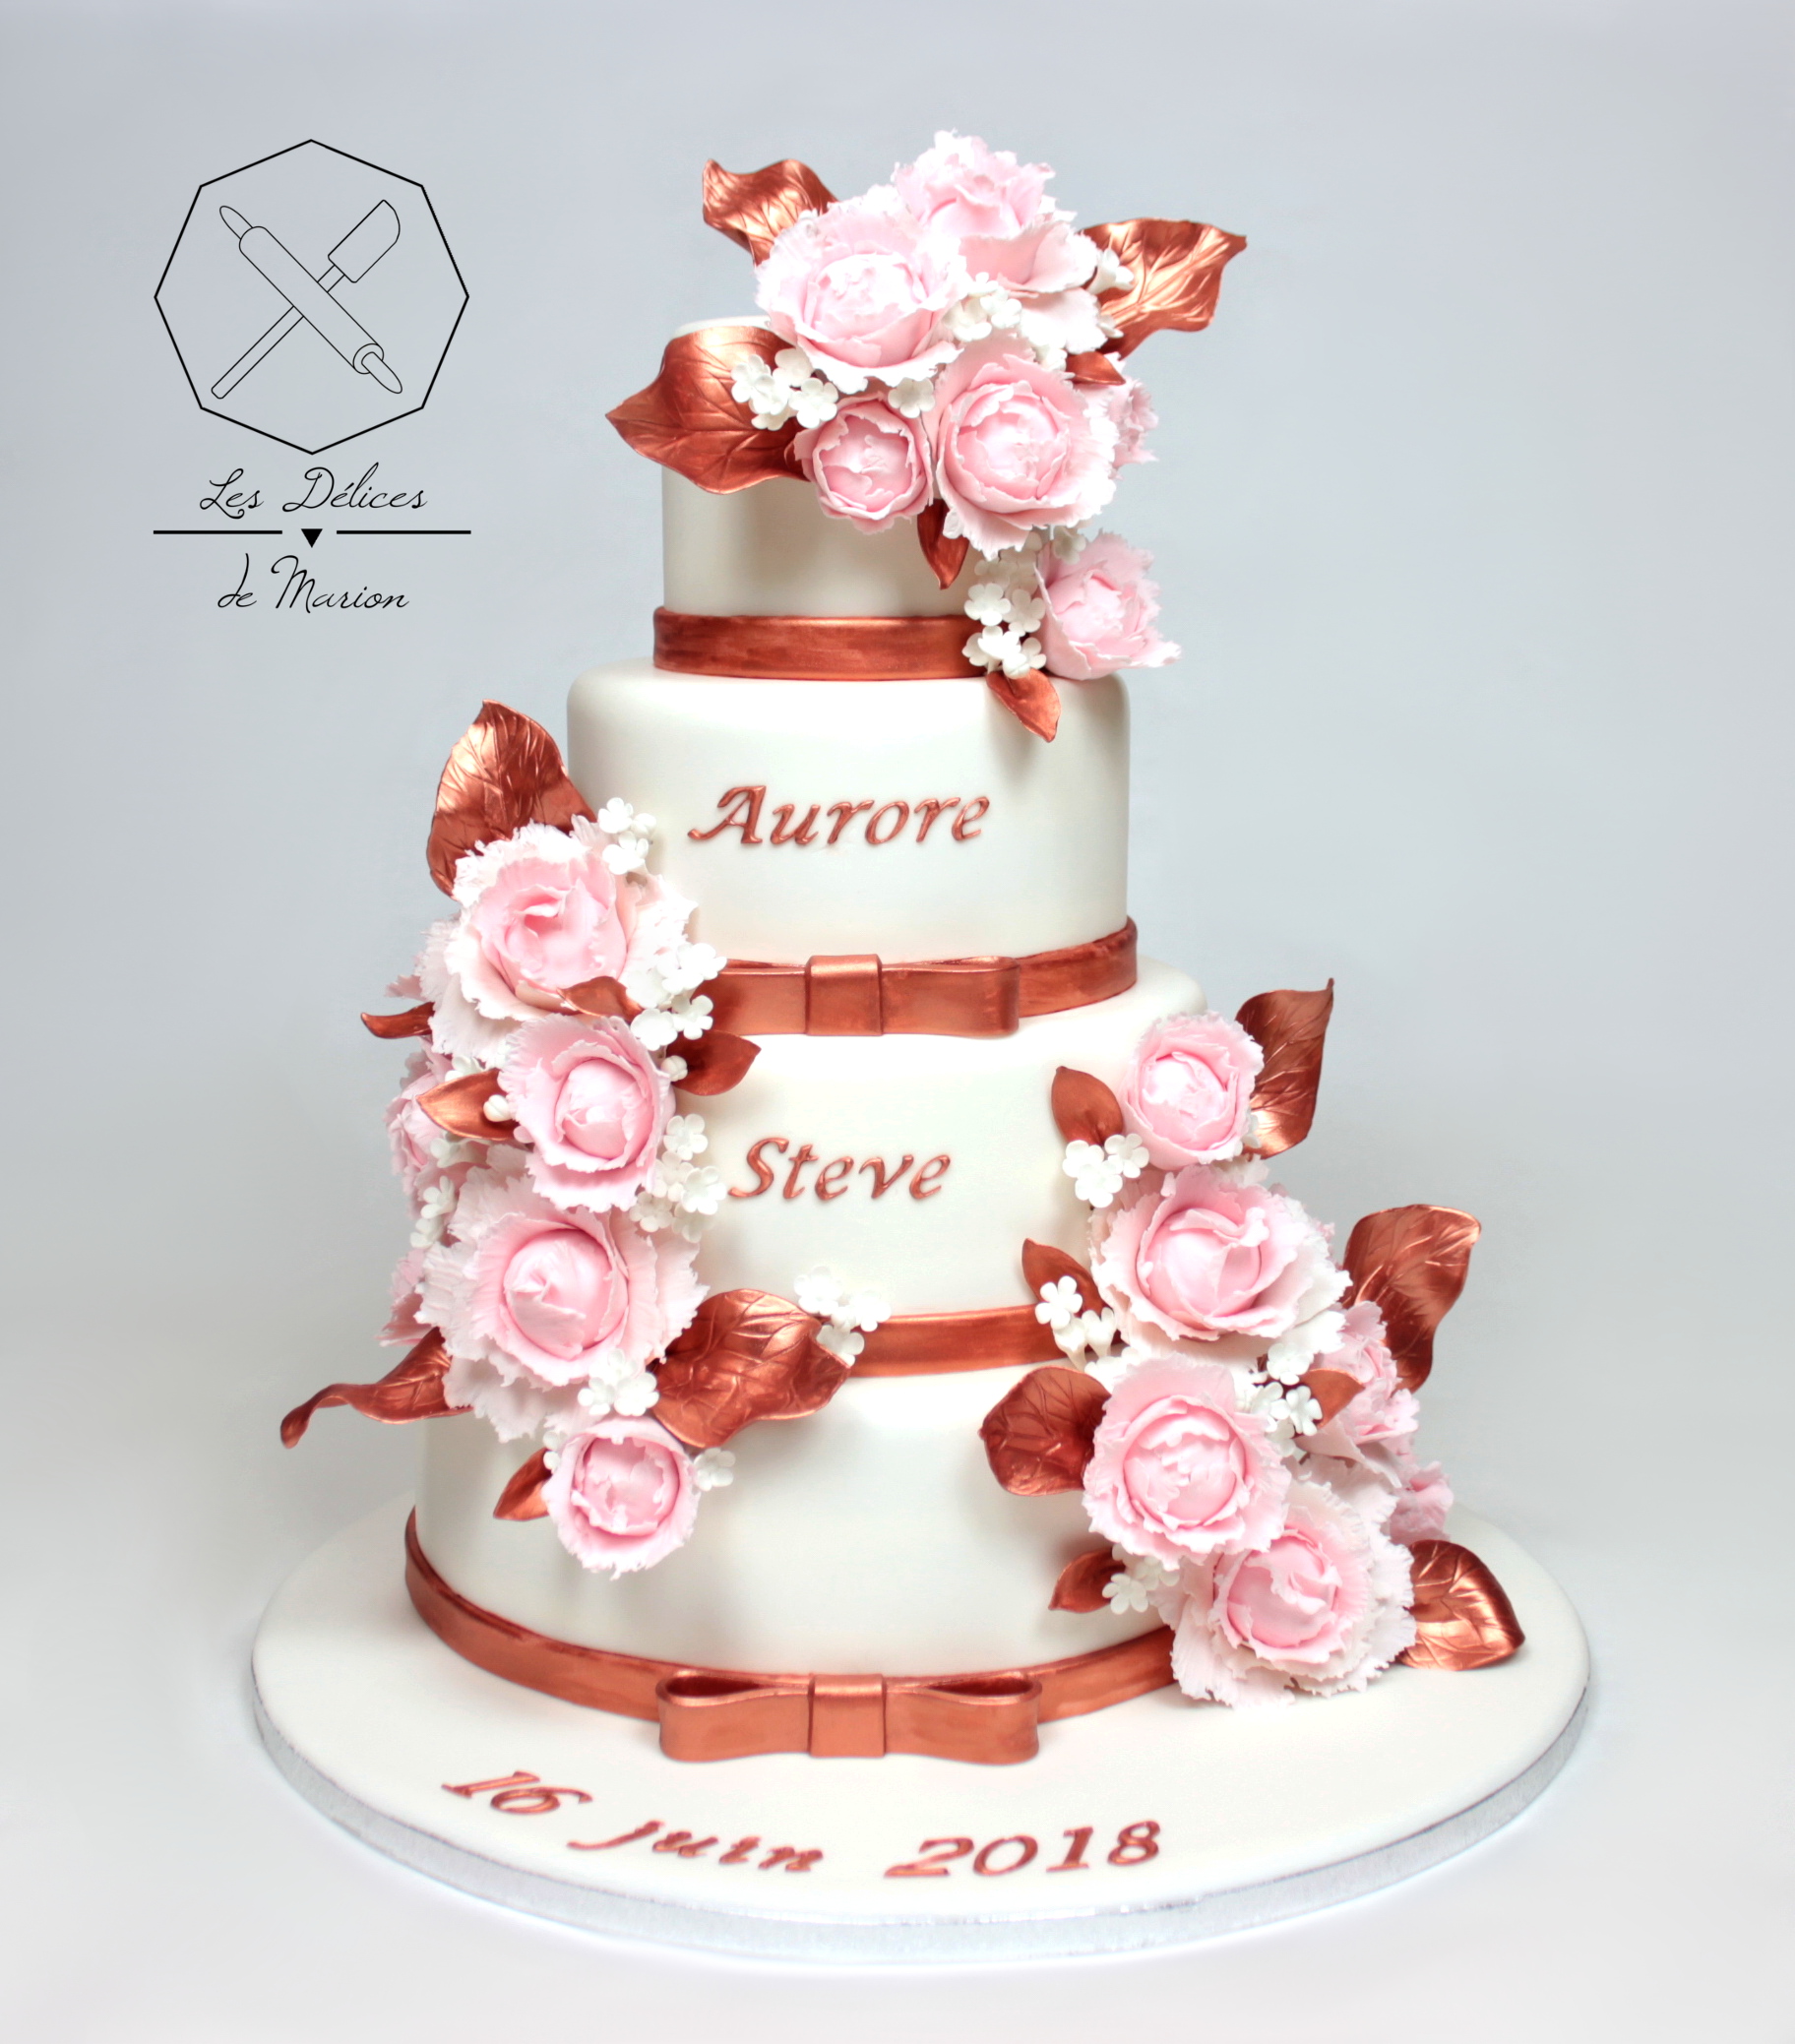 gateau_mariage_wedding-cake_cuivre_or-rose_pivoines_fleurs_cake-design_delices-marion